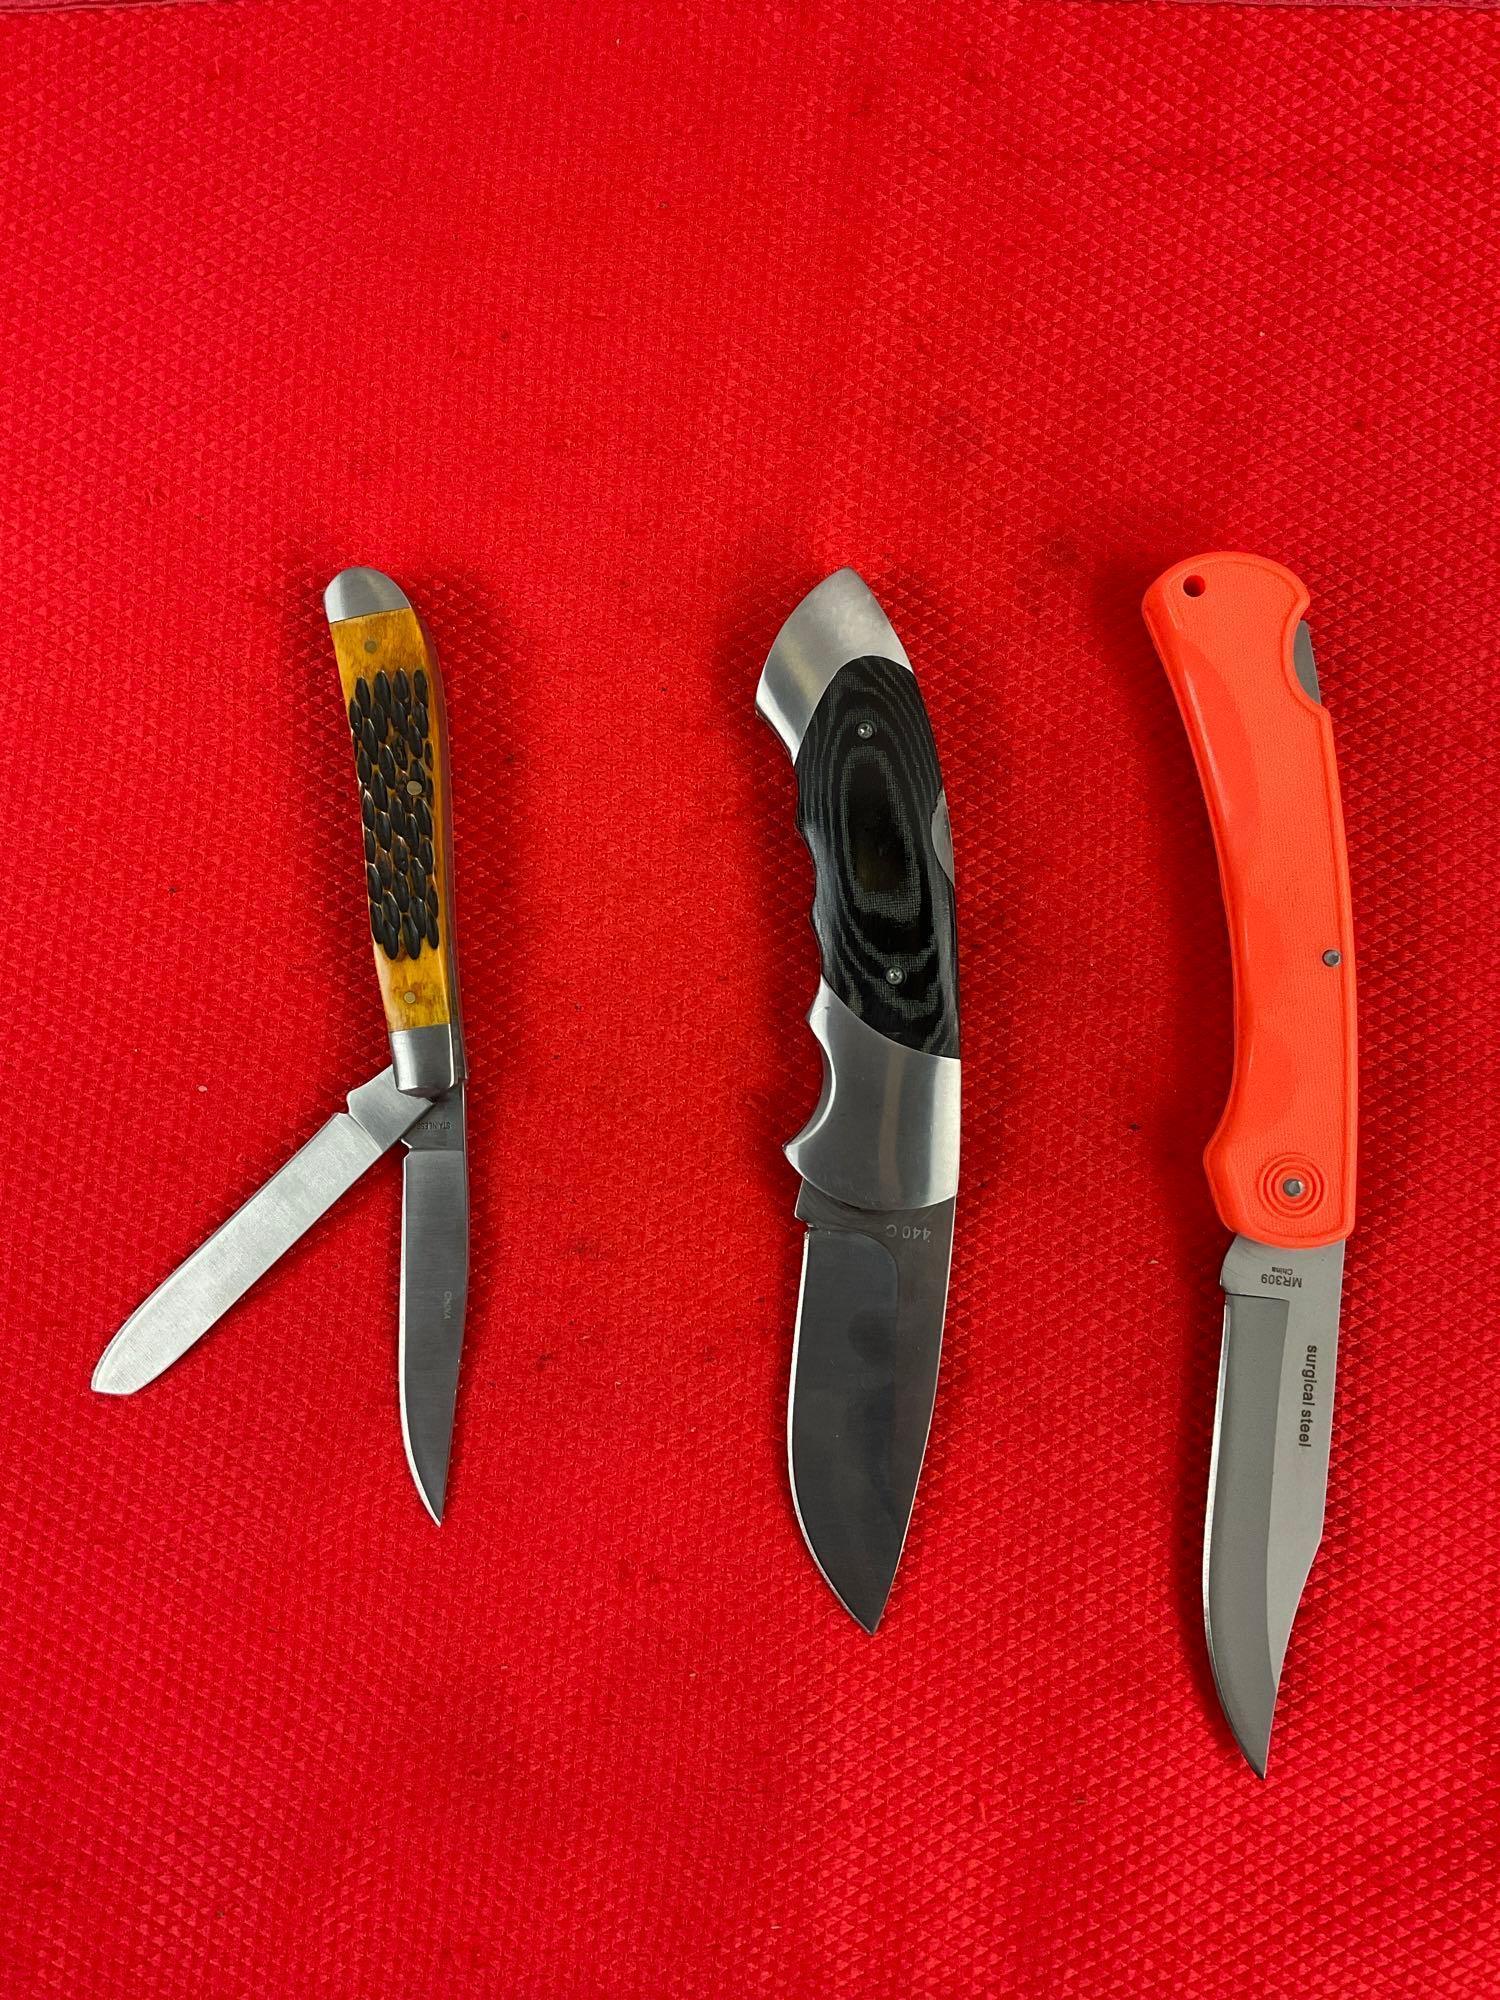 3 pcs Modern Steel Folding Blade Pocket Knives. 1x Browning, 1x Marble's, 1x Rite Edge. NIB. See